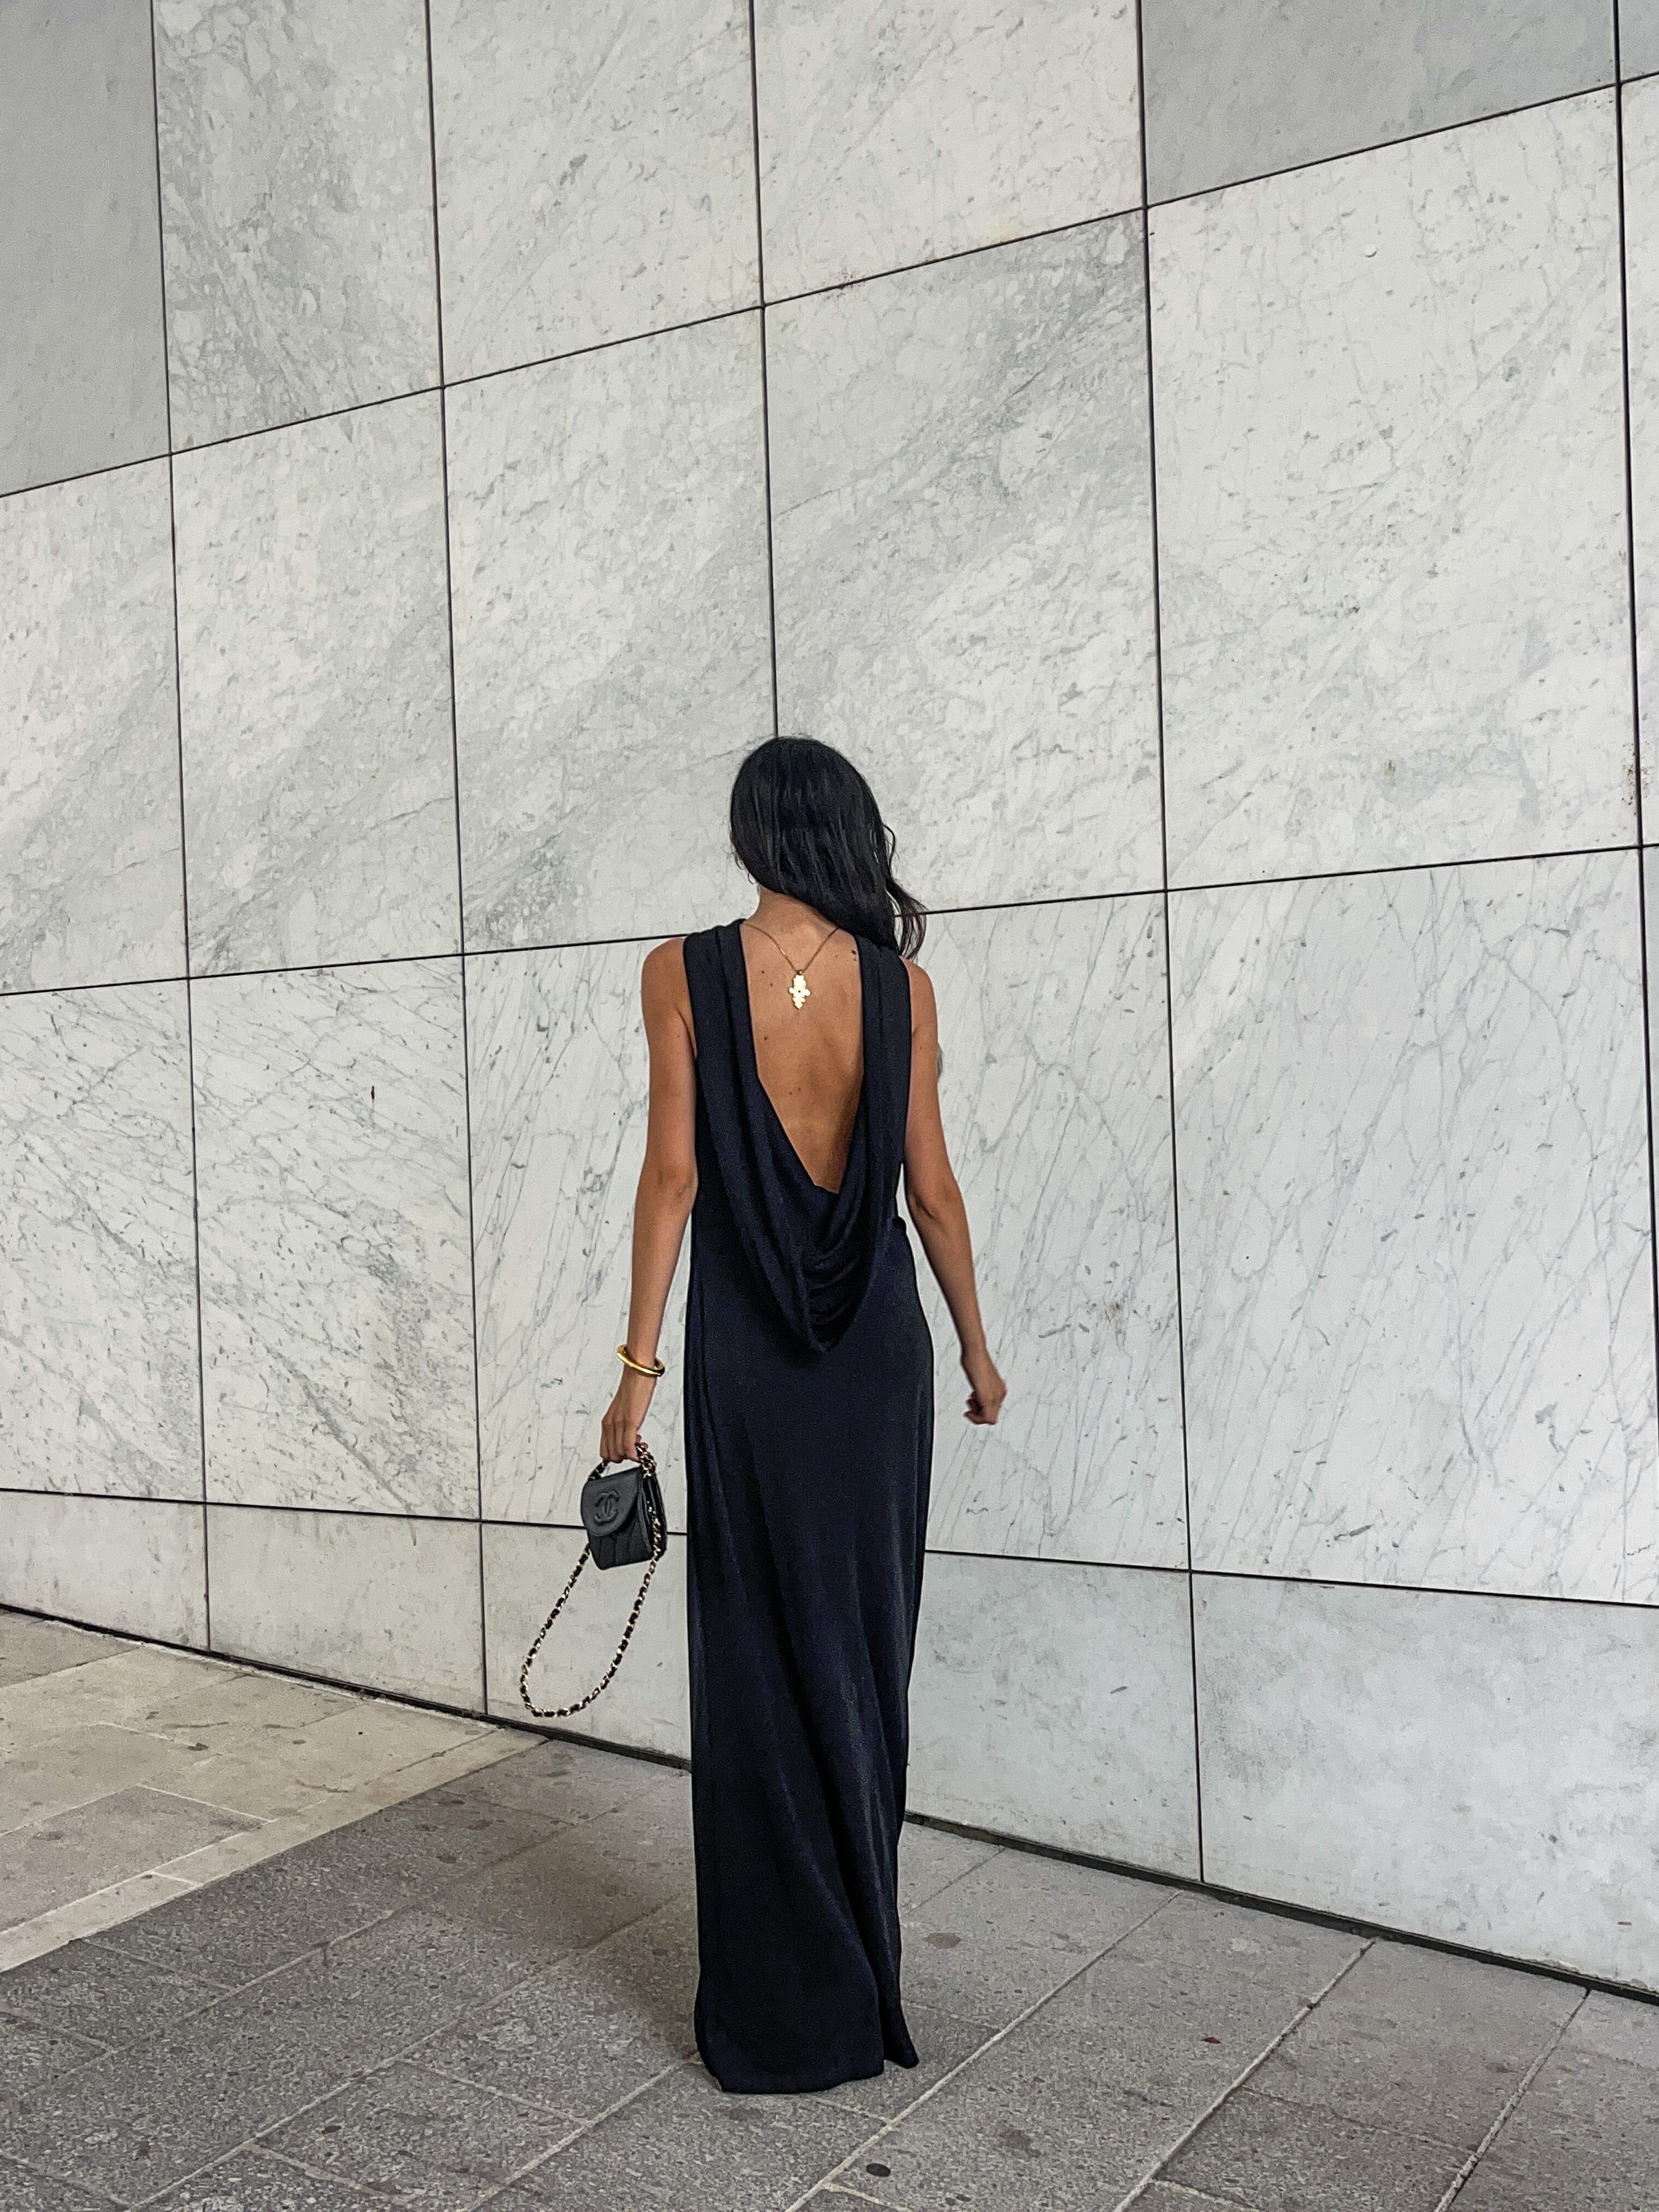 Backless black dress 🖤